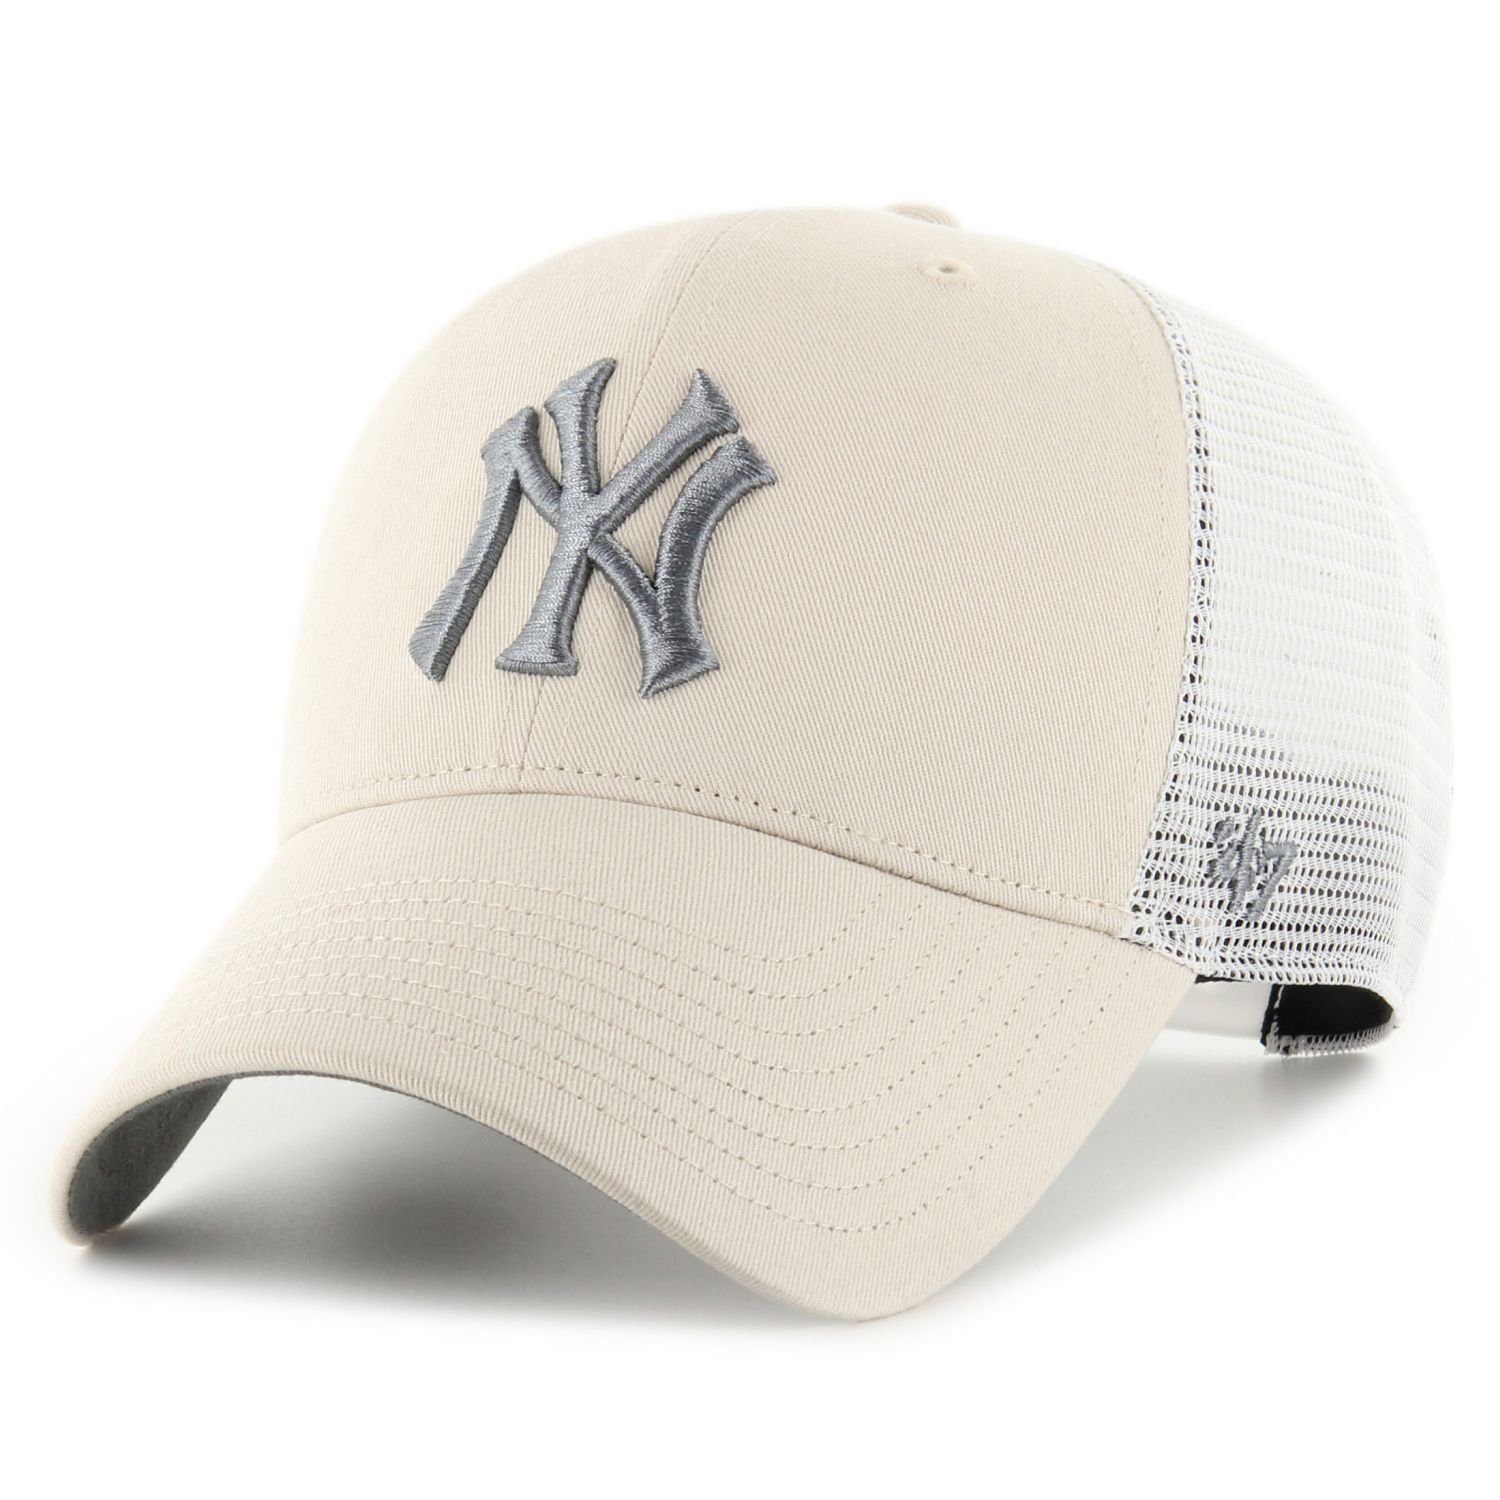 '47 Brand Trucker Cap Trucker BALLPARK New York Yankees bone